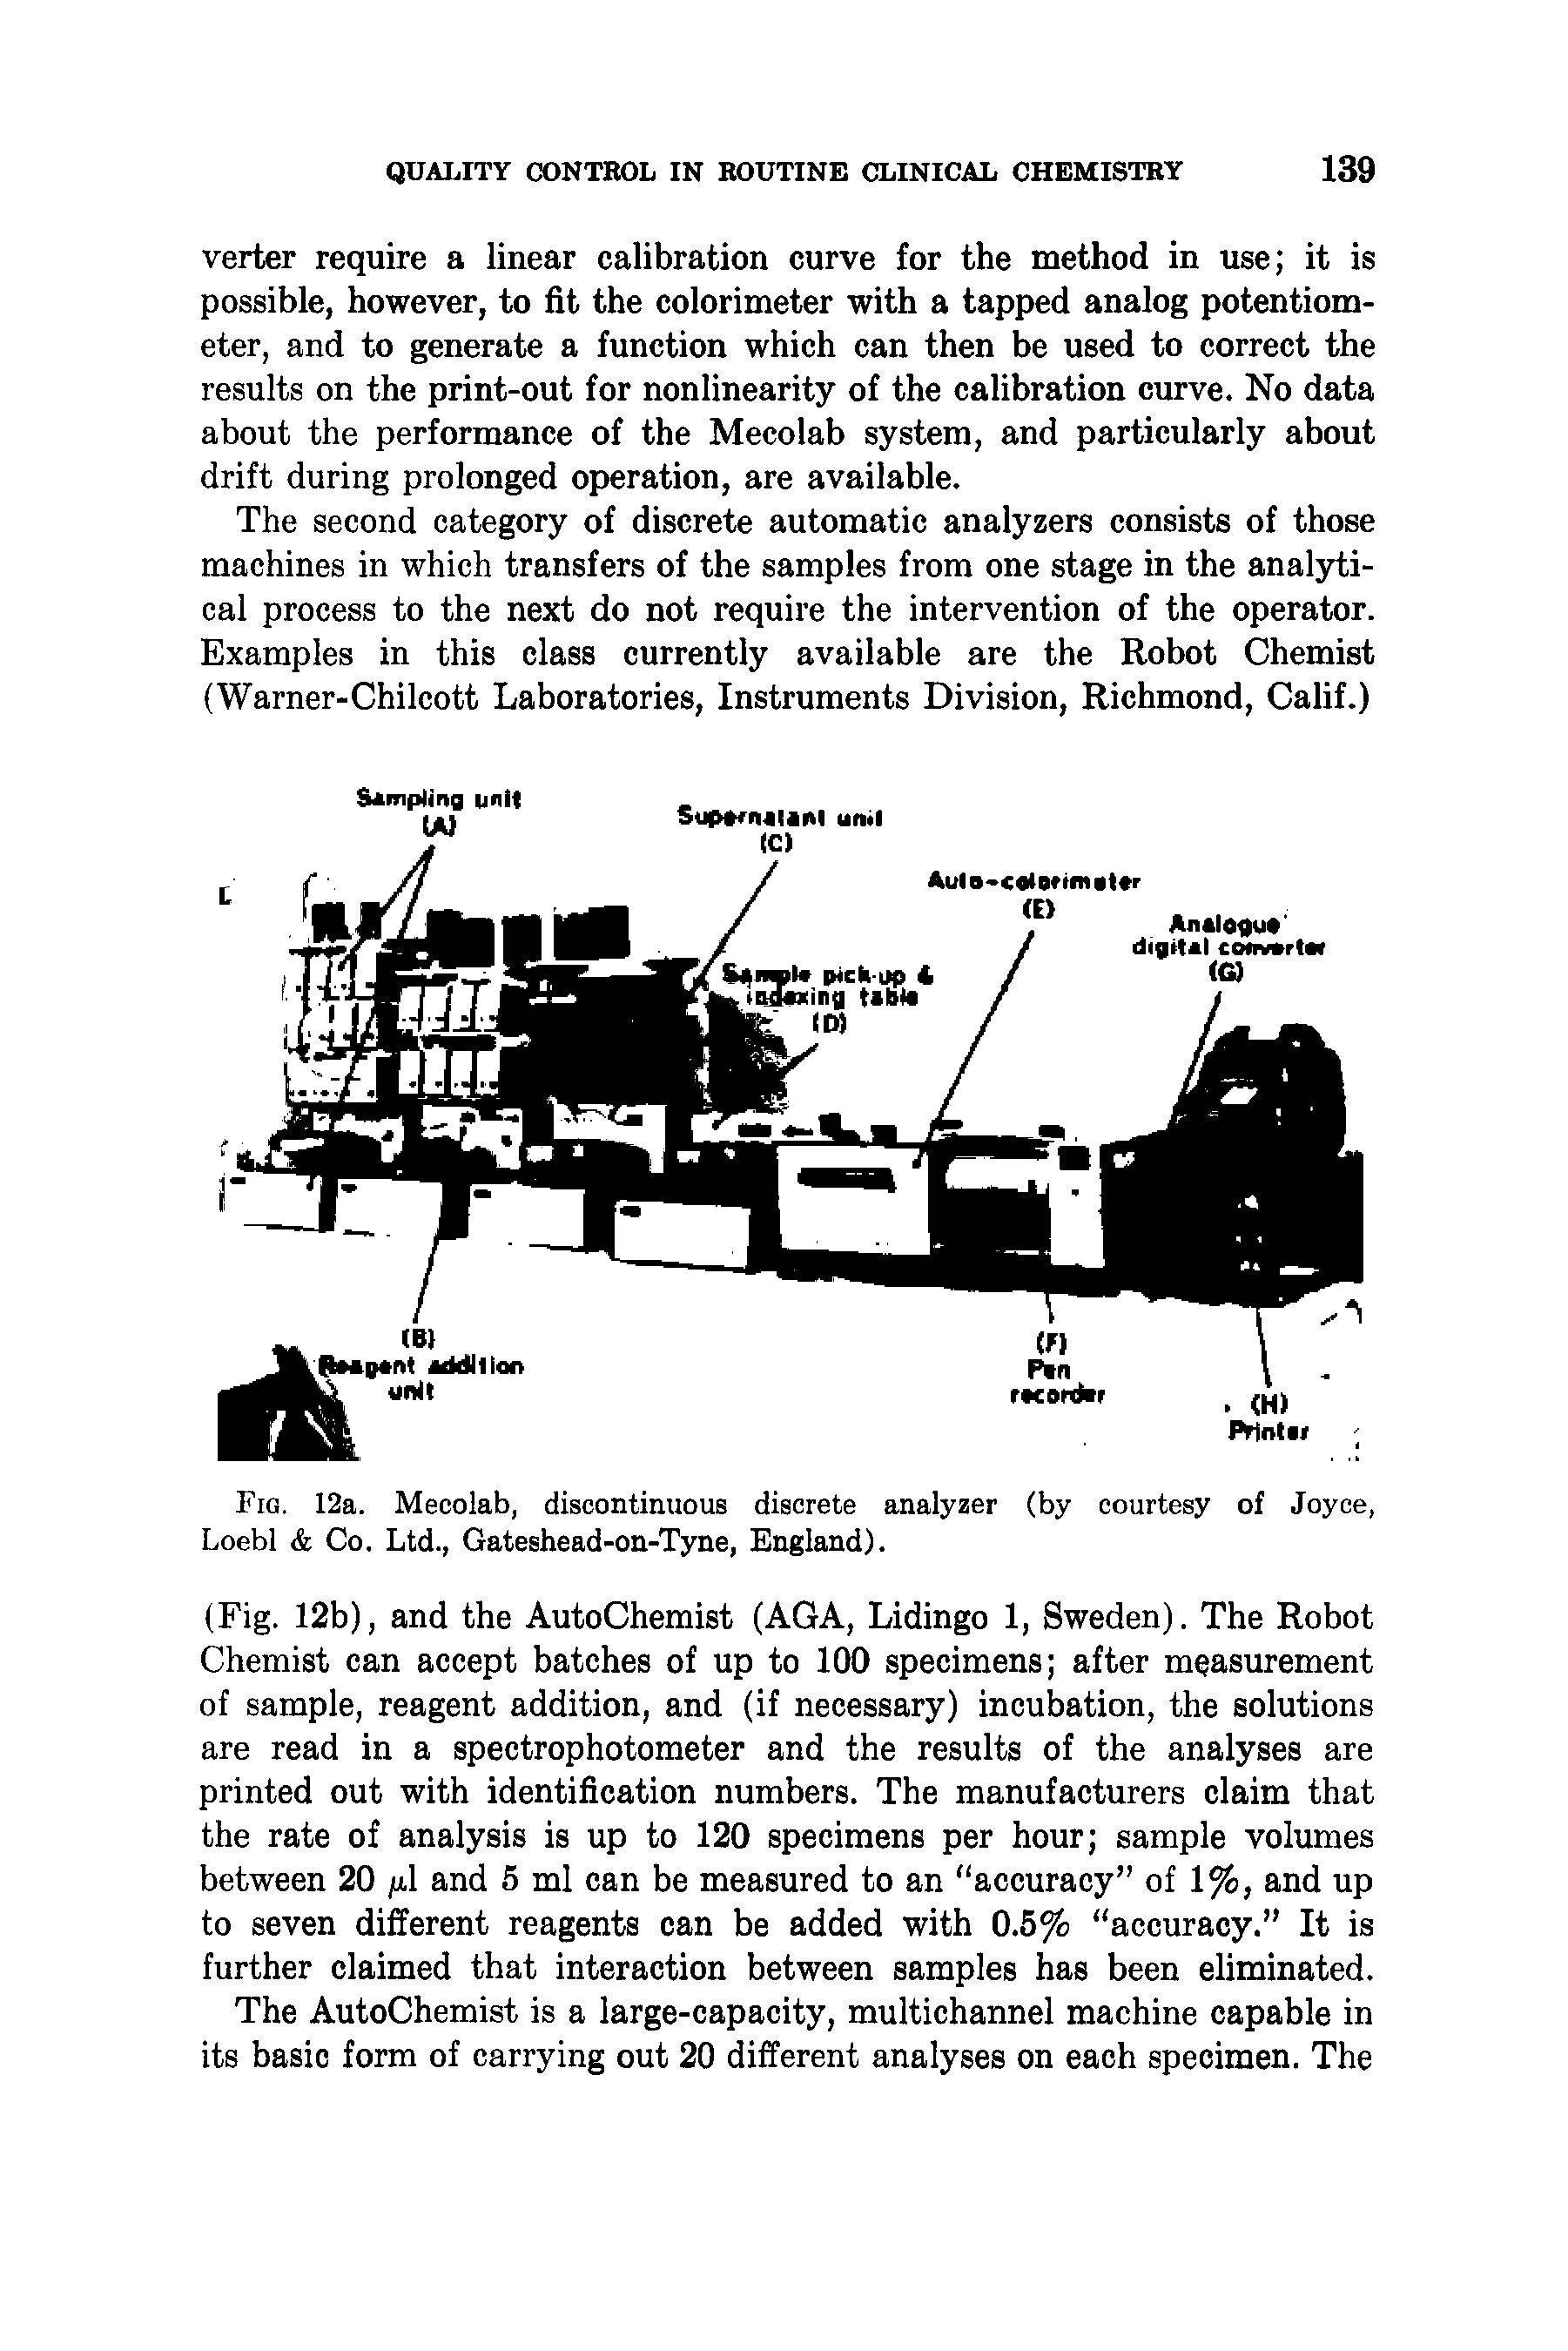 Fig. 12a. Mecolab, discontinuous discrete analyzer (by courtesy of Joyce, Loebl Co. Ltd., Gateshead-on-Tyne, England).